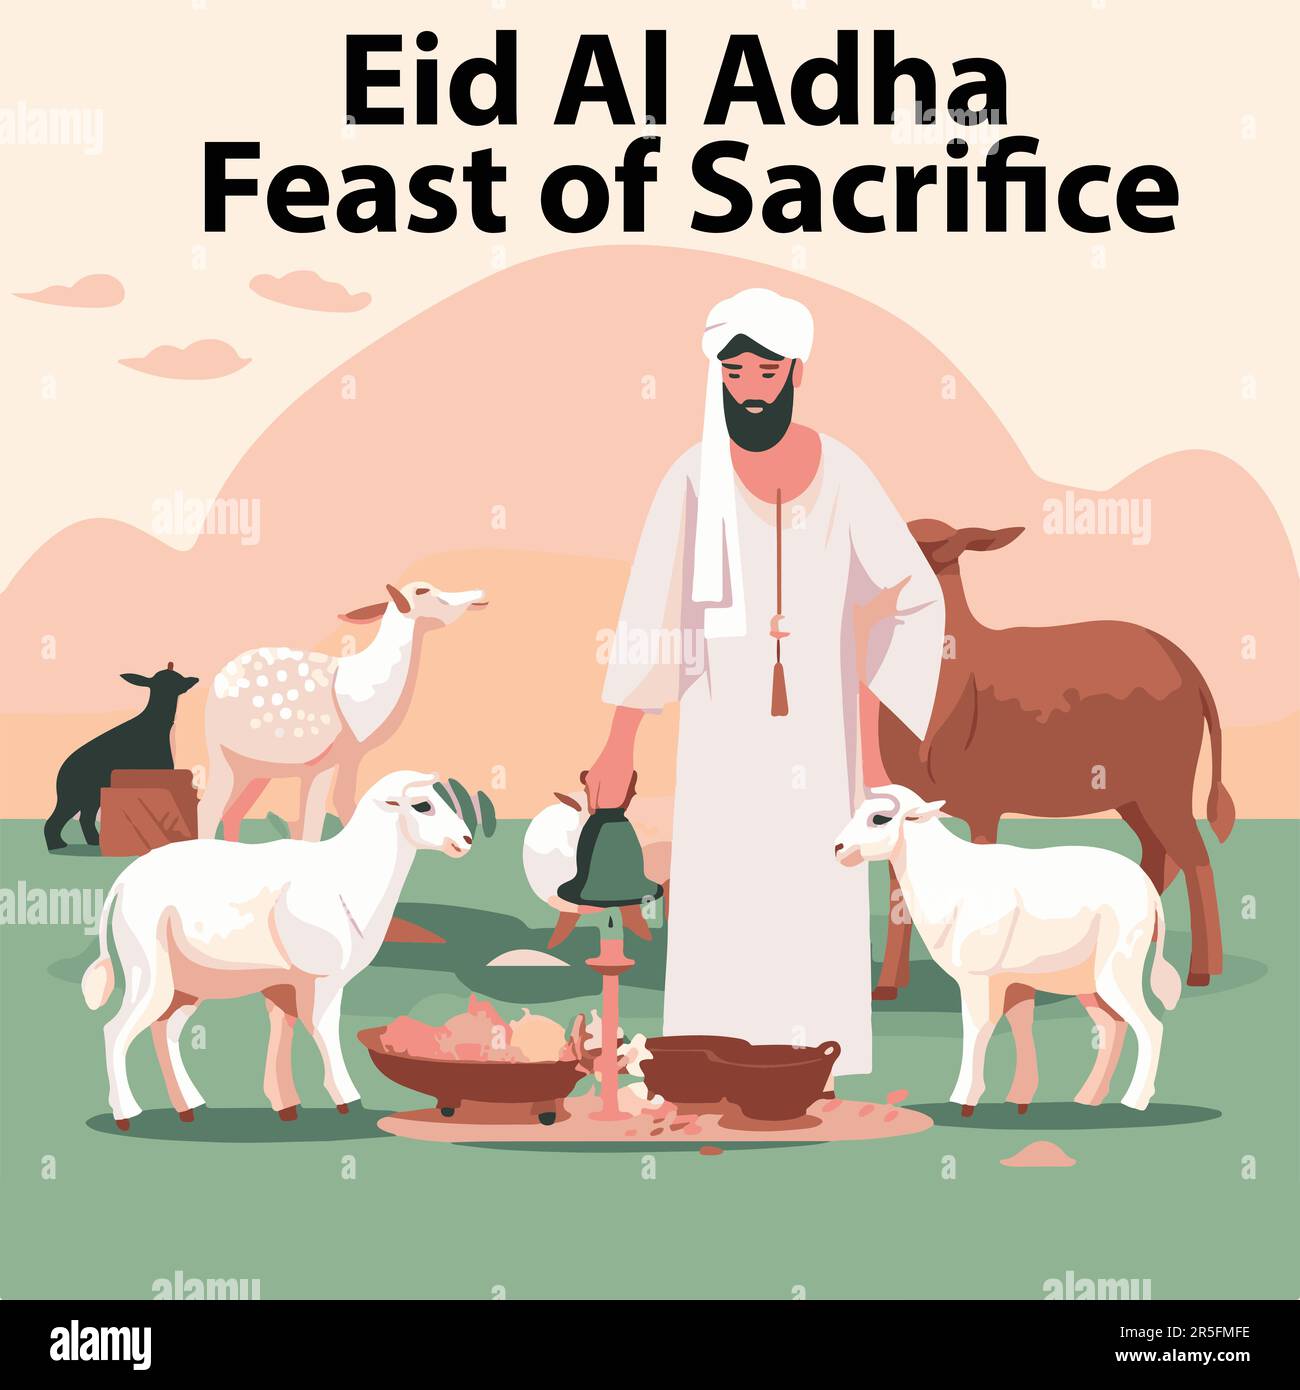 EID al Adha Feast of Sacrifice illustrazione vettoriale piatta. Illustrazione Vettoriale